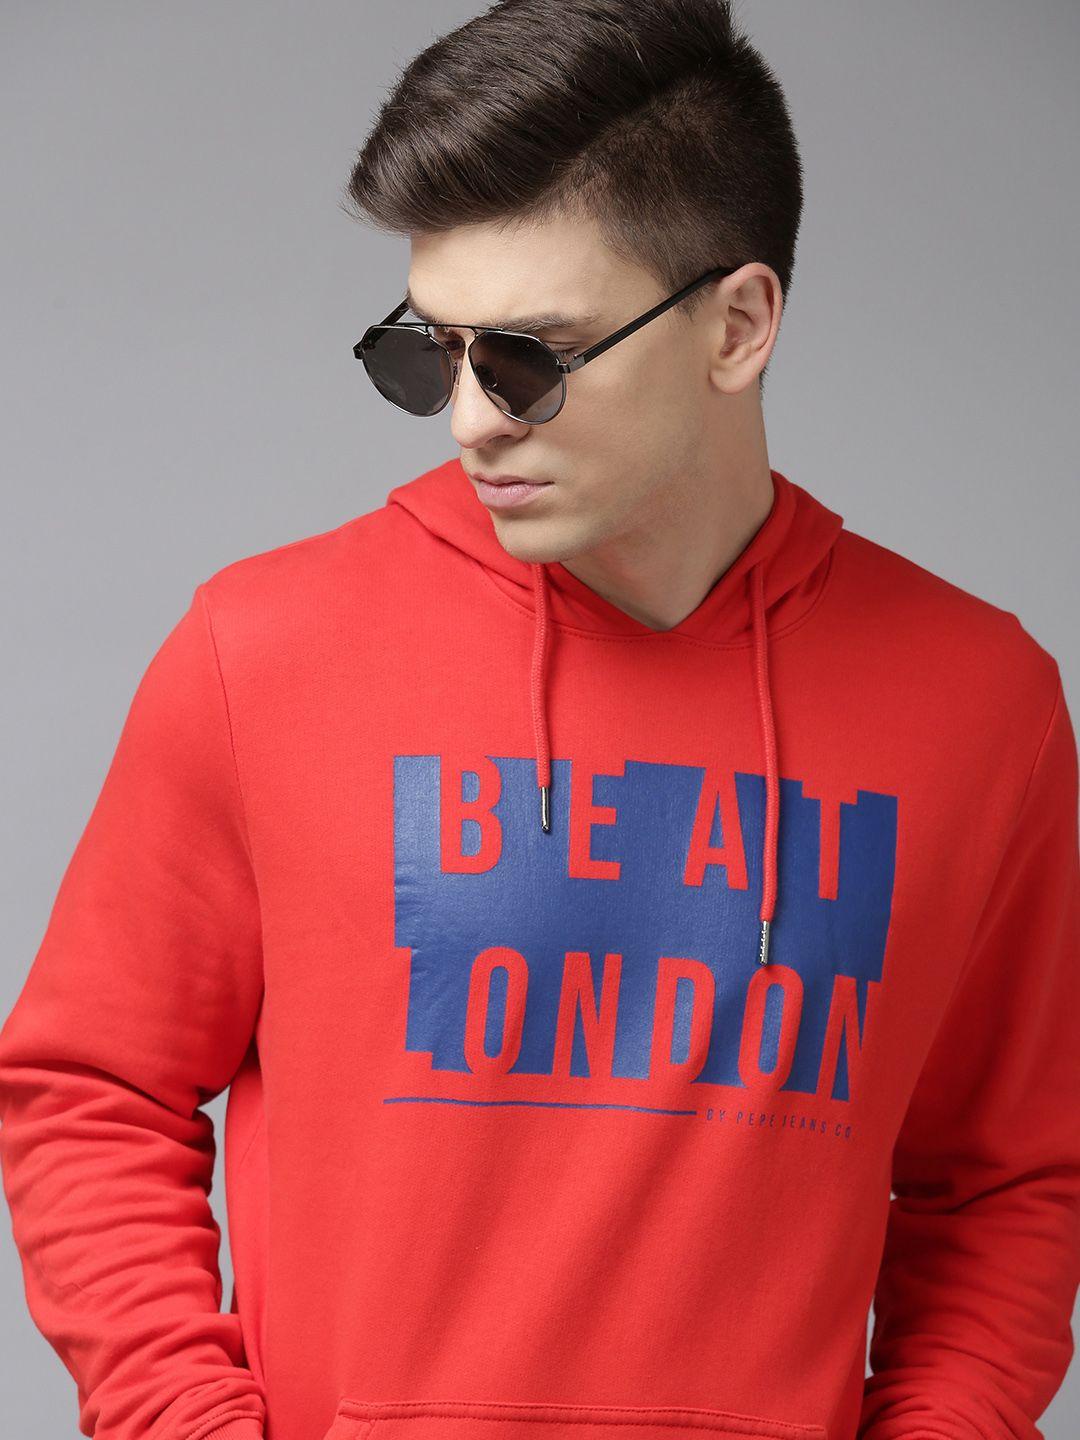 beat london by pepe jeans men red brand logo printed hooded sweatshirt